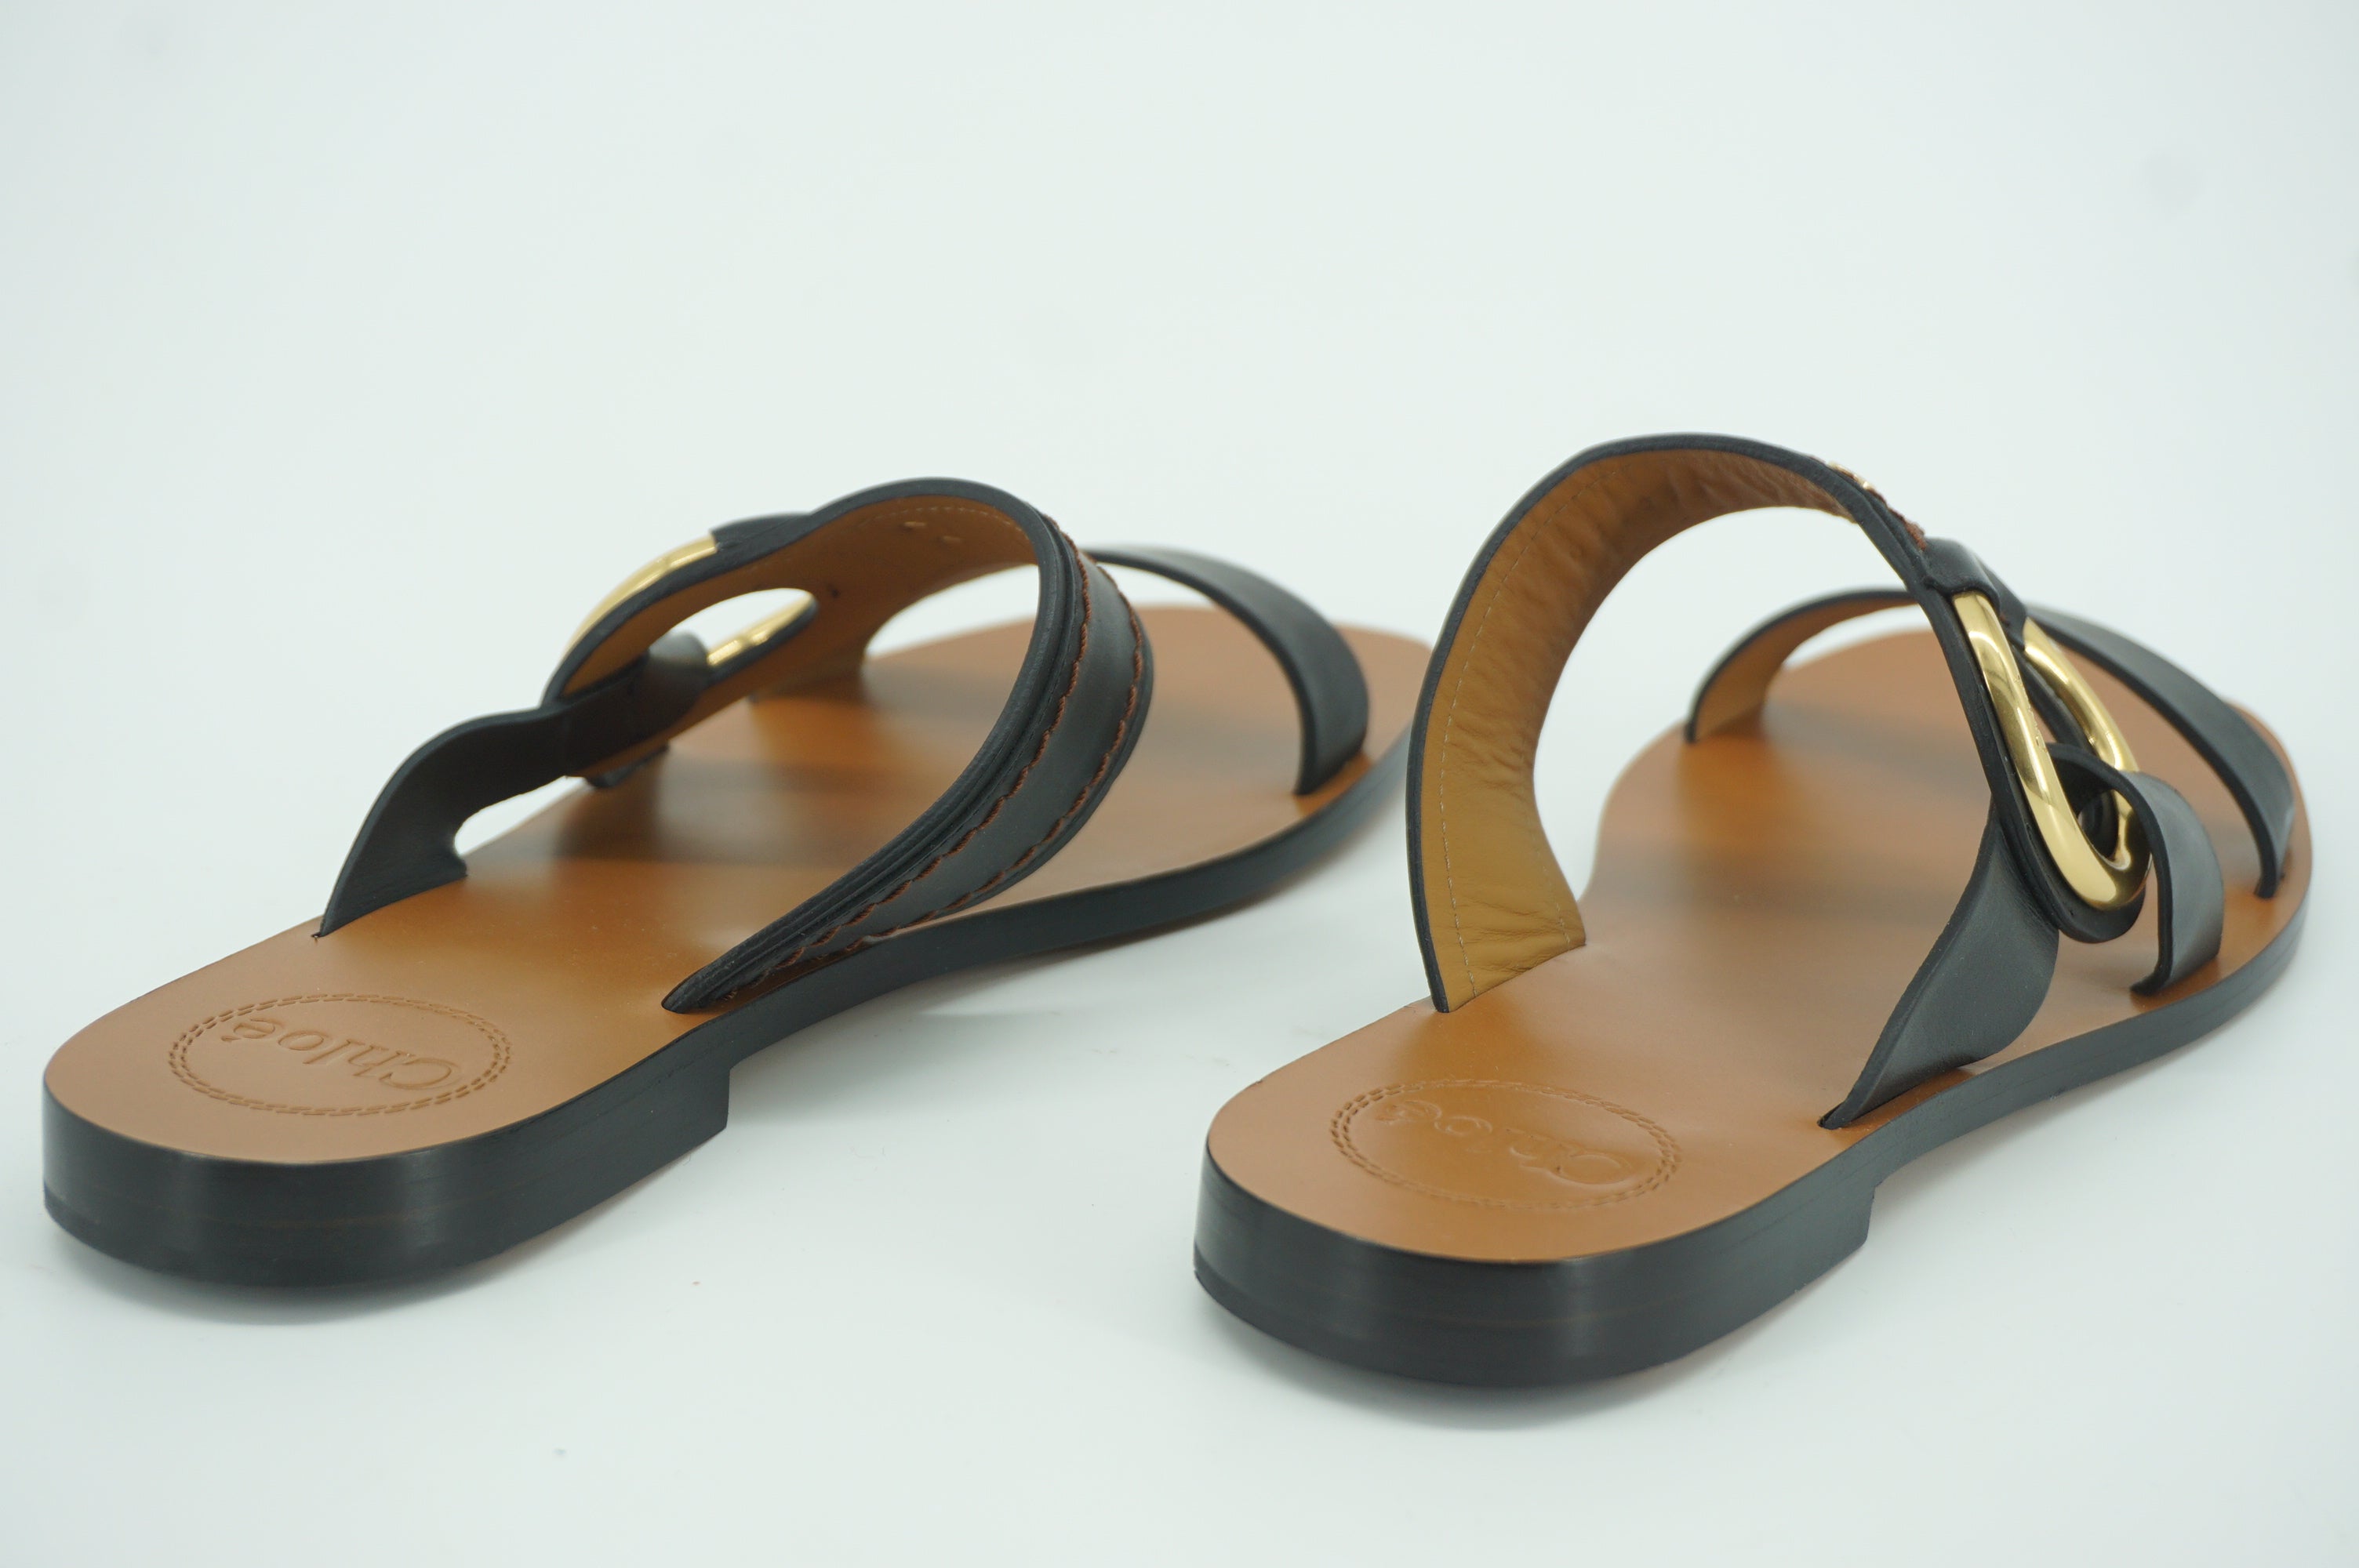 Chloe Demi Slide Buckle Glide Flat Sandals SZ 38 NIB New $670 Black Leather